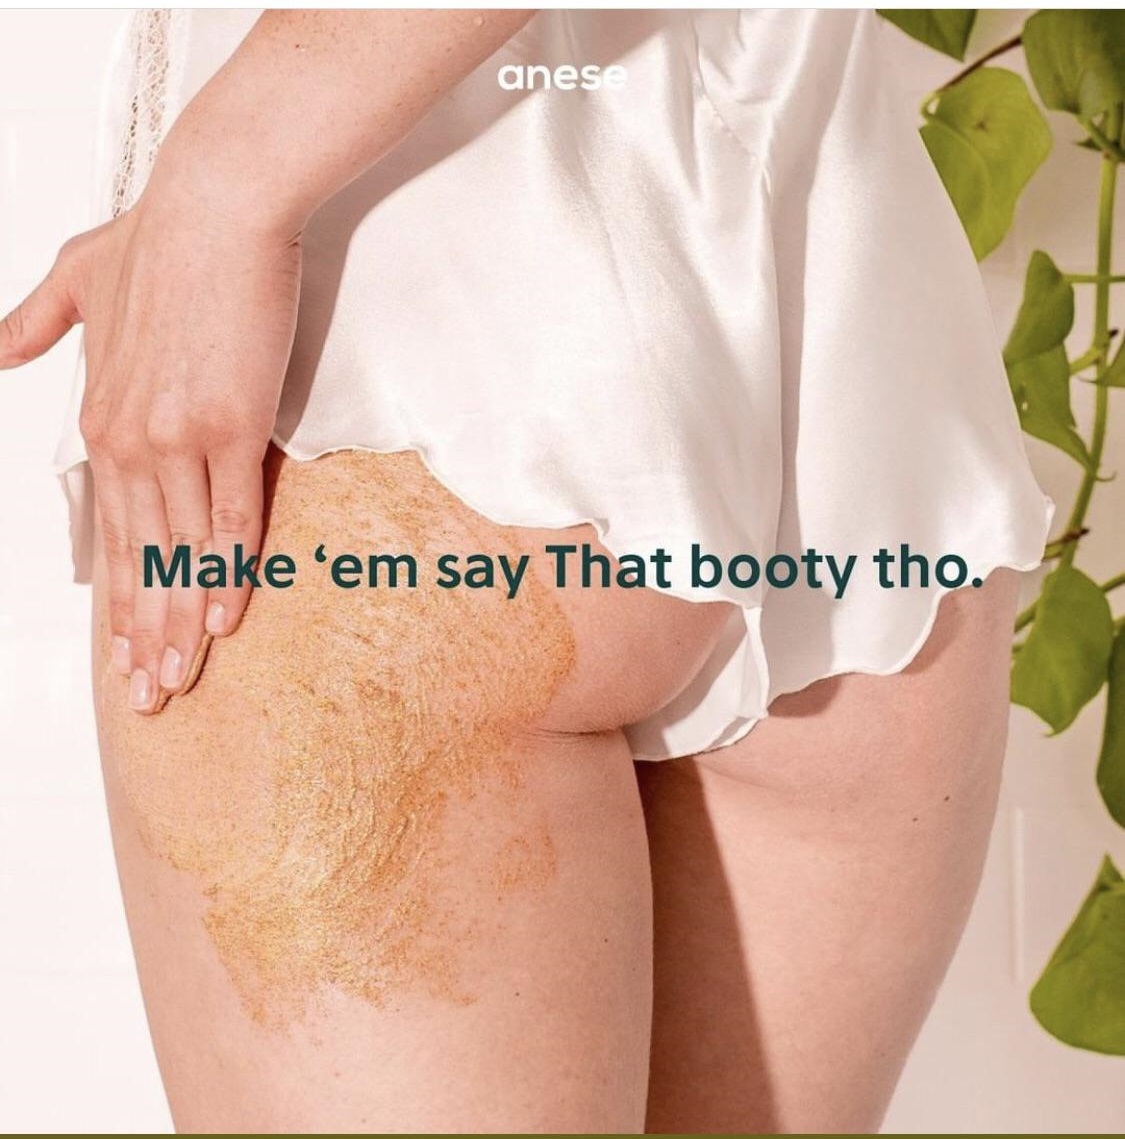 thigh - anese Make 'em say That booty tho.